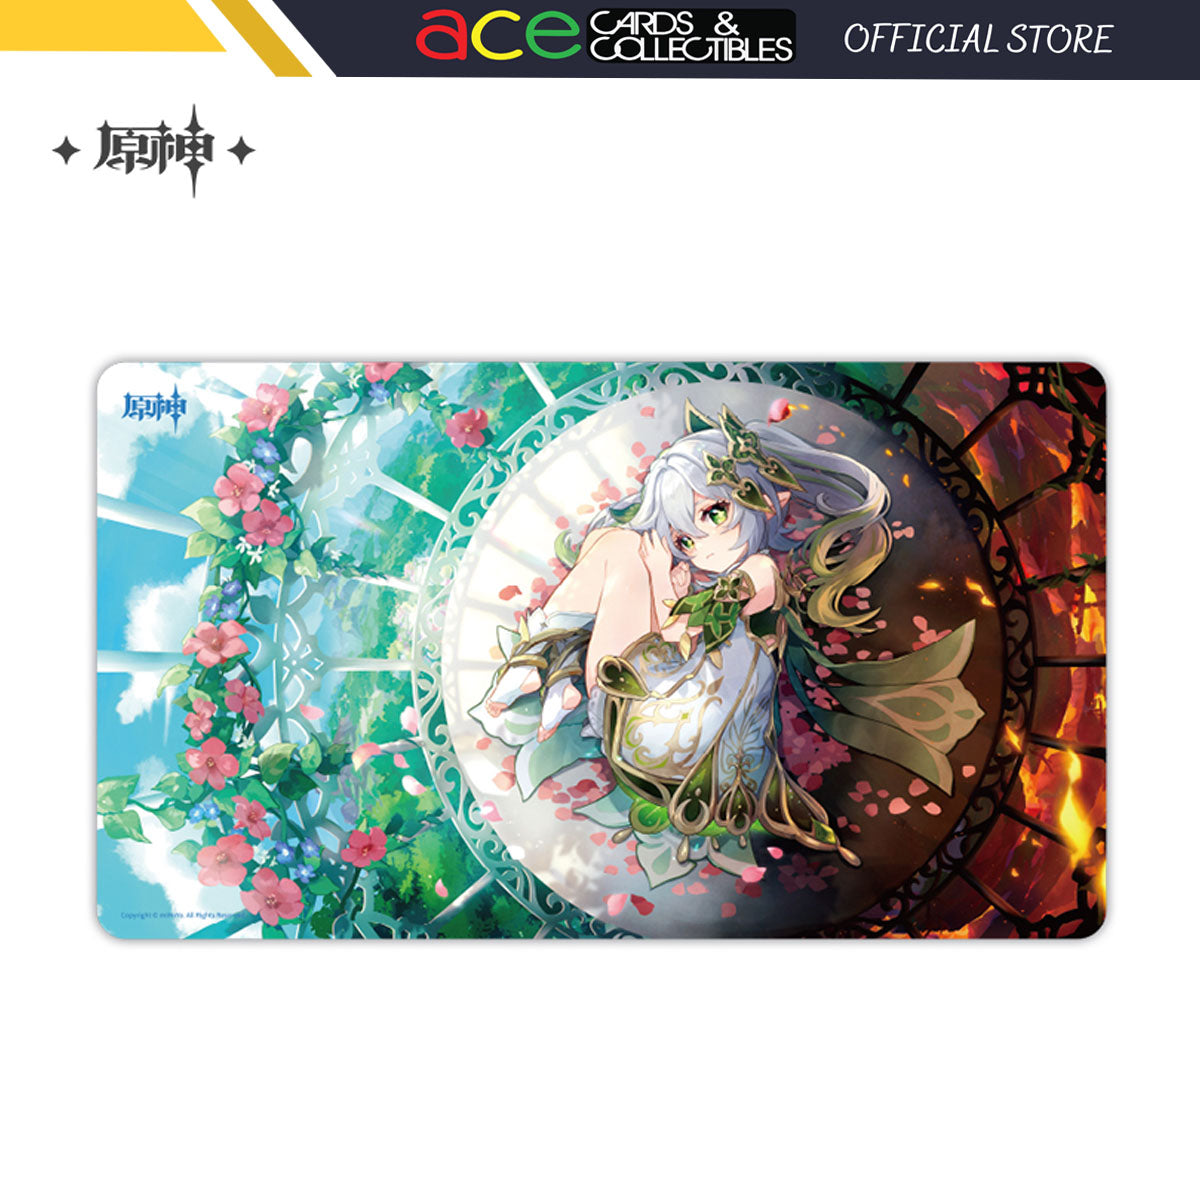 miHoYo Genshin Impact -Akasha Pulses, the Kalpa Flame Rises- Theme Mousepad-miHoYo-Ace Cards & Collectibles